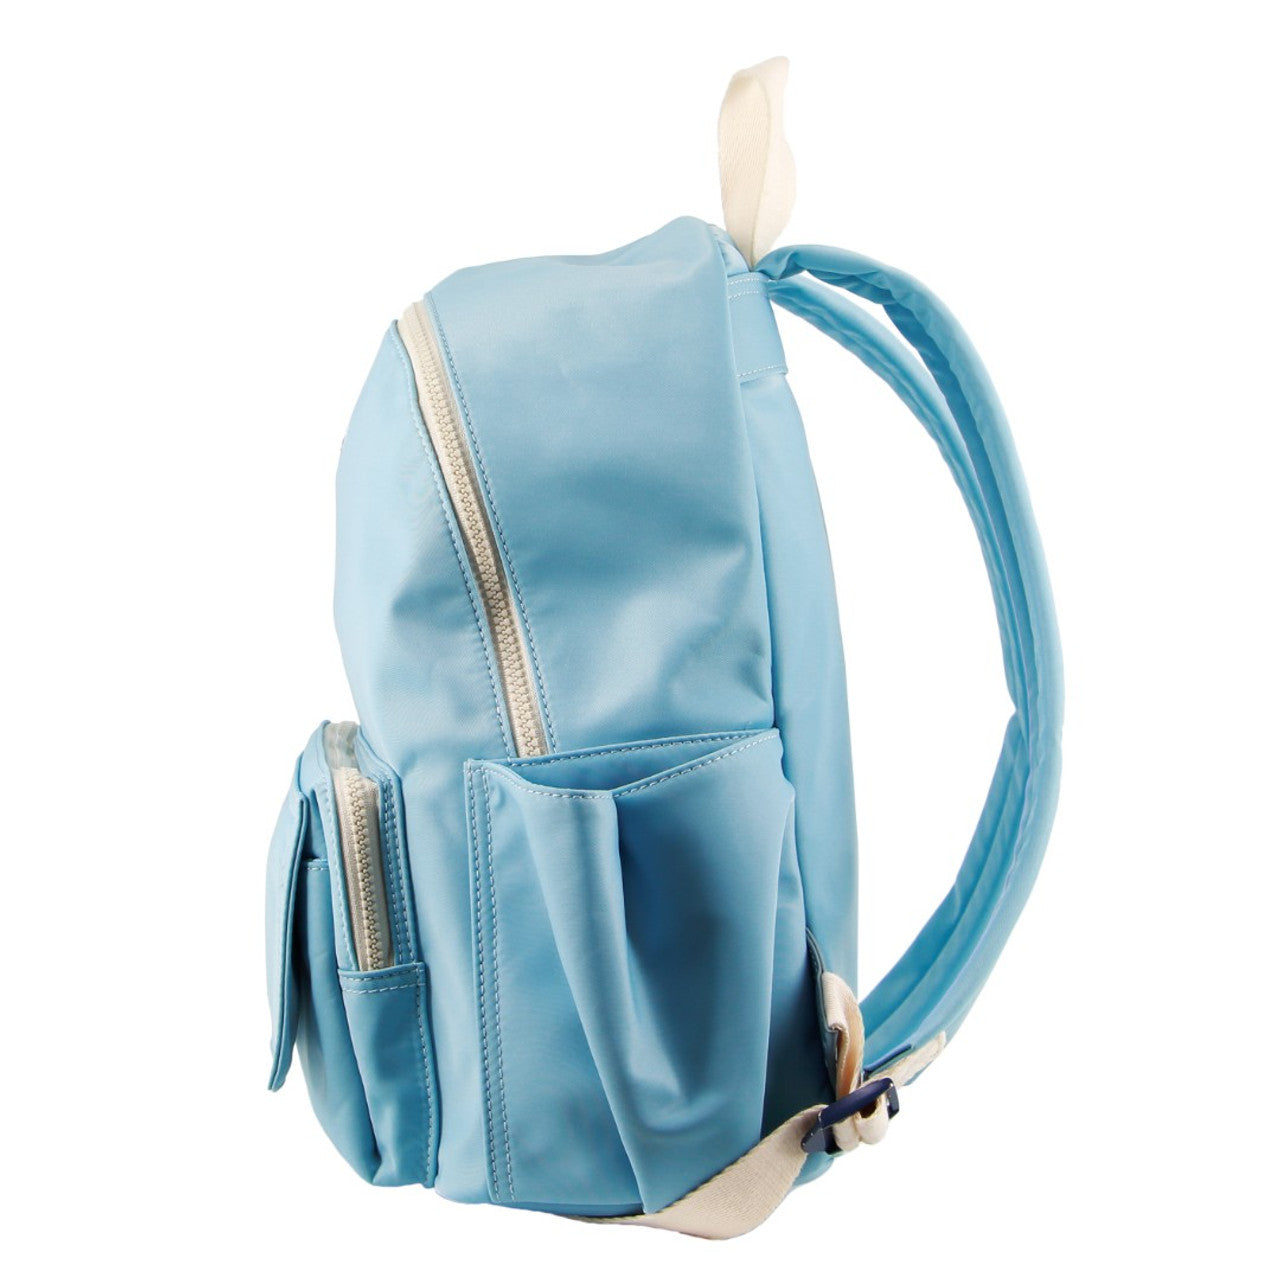 GAP - 11 Nylon Backpack front pocket - Light Blue - 0